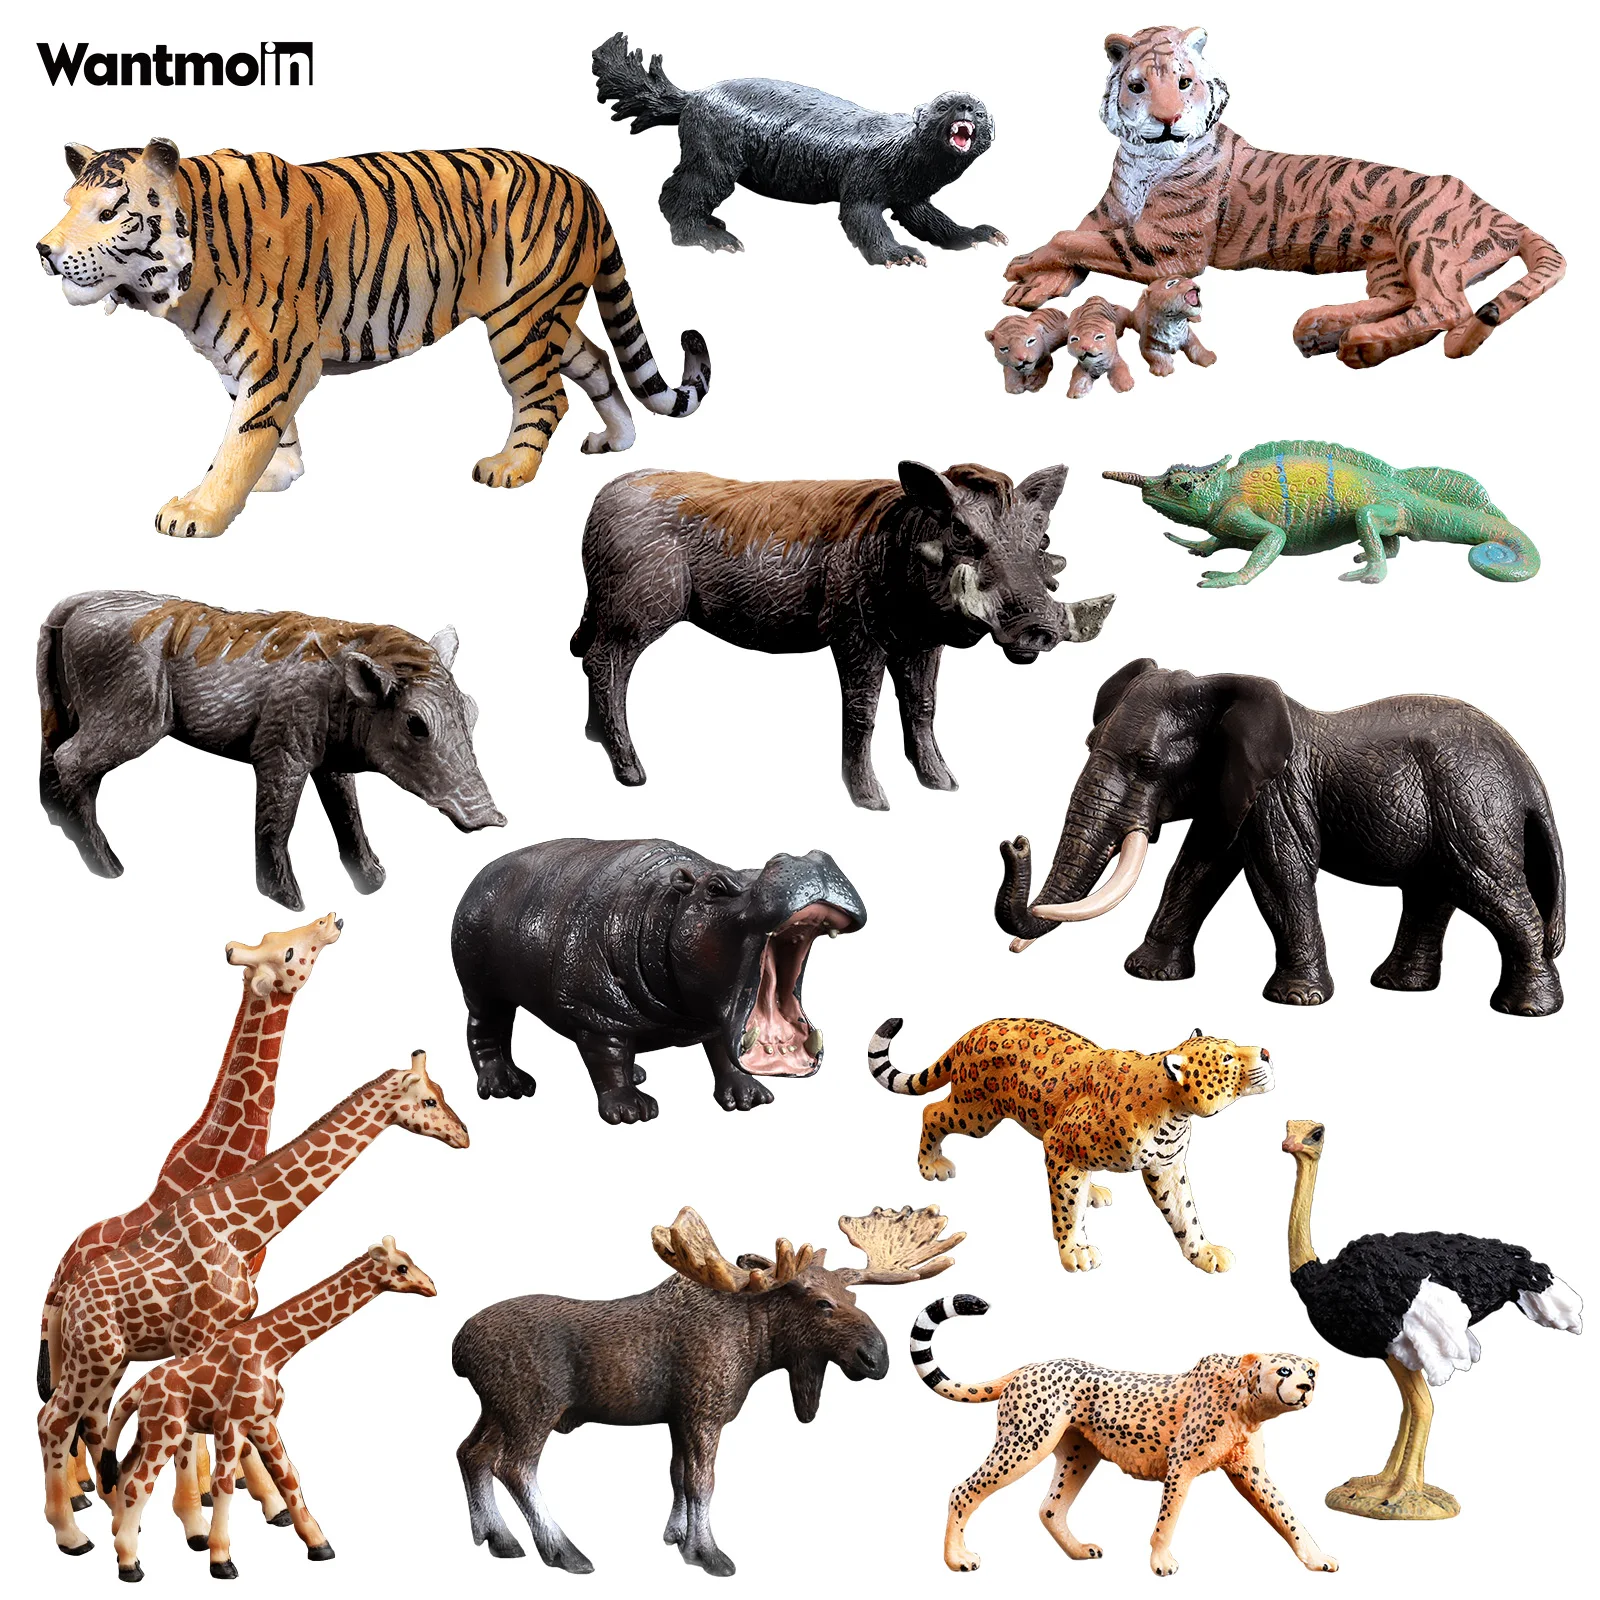 

Safari Animals Figures Toys, Realistic Jumbo Wild Zoo Animals Figurines Large- Plastic Playset with Elephant, Giraffe, Lion, etc